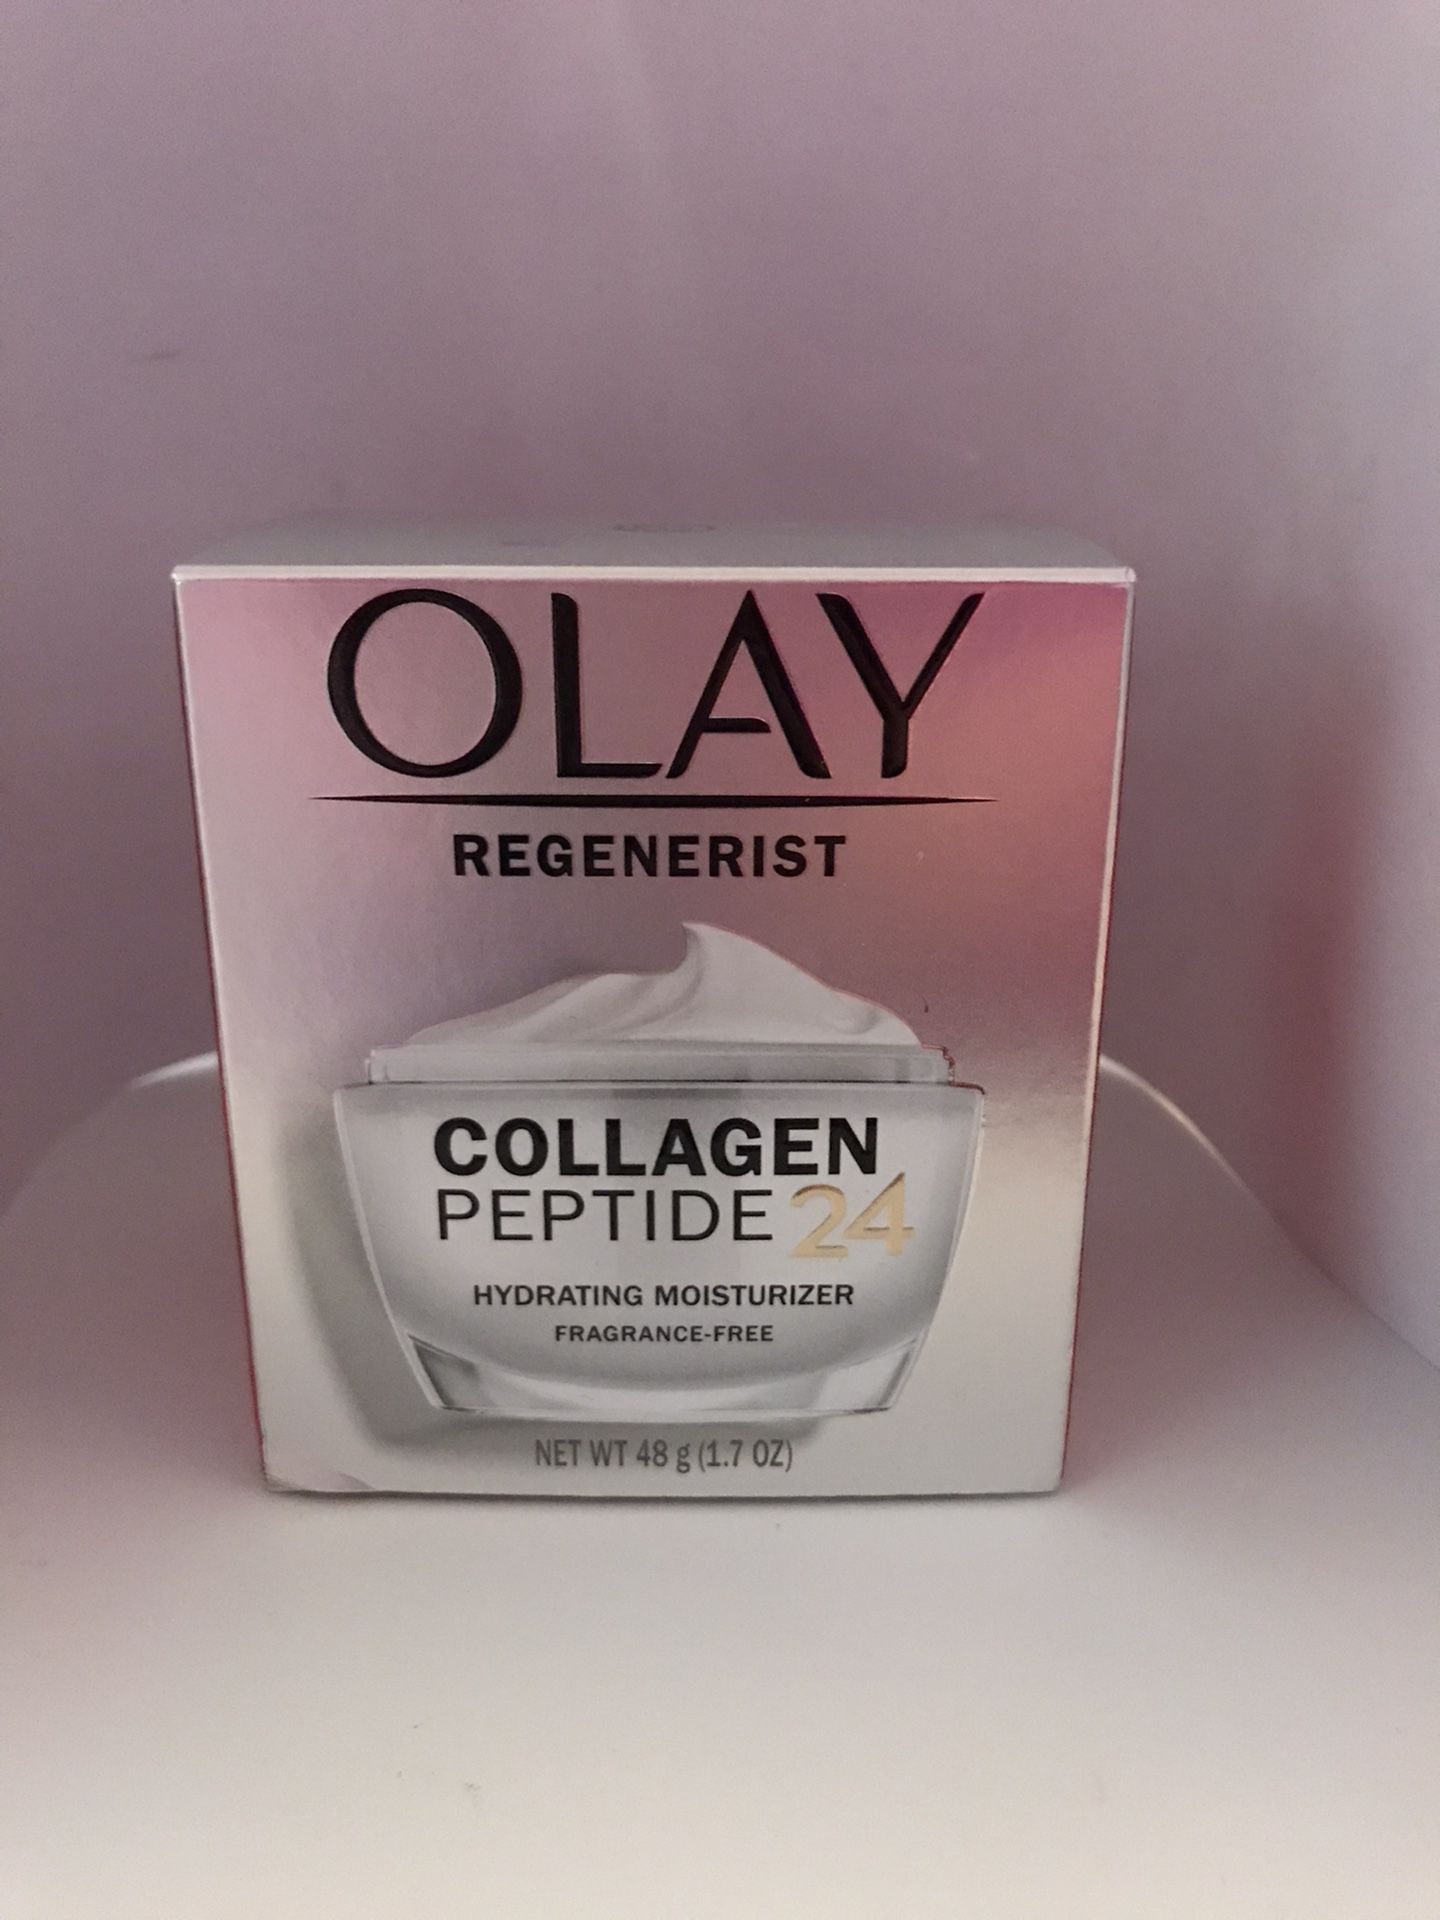 OLAY Regenerist Collagen Peptide 24 1.7oz